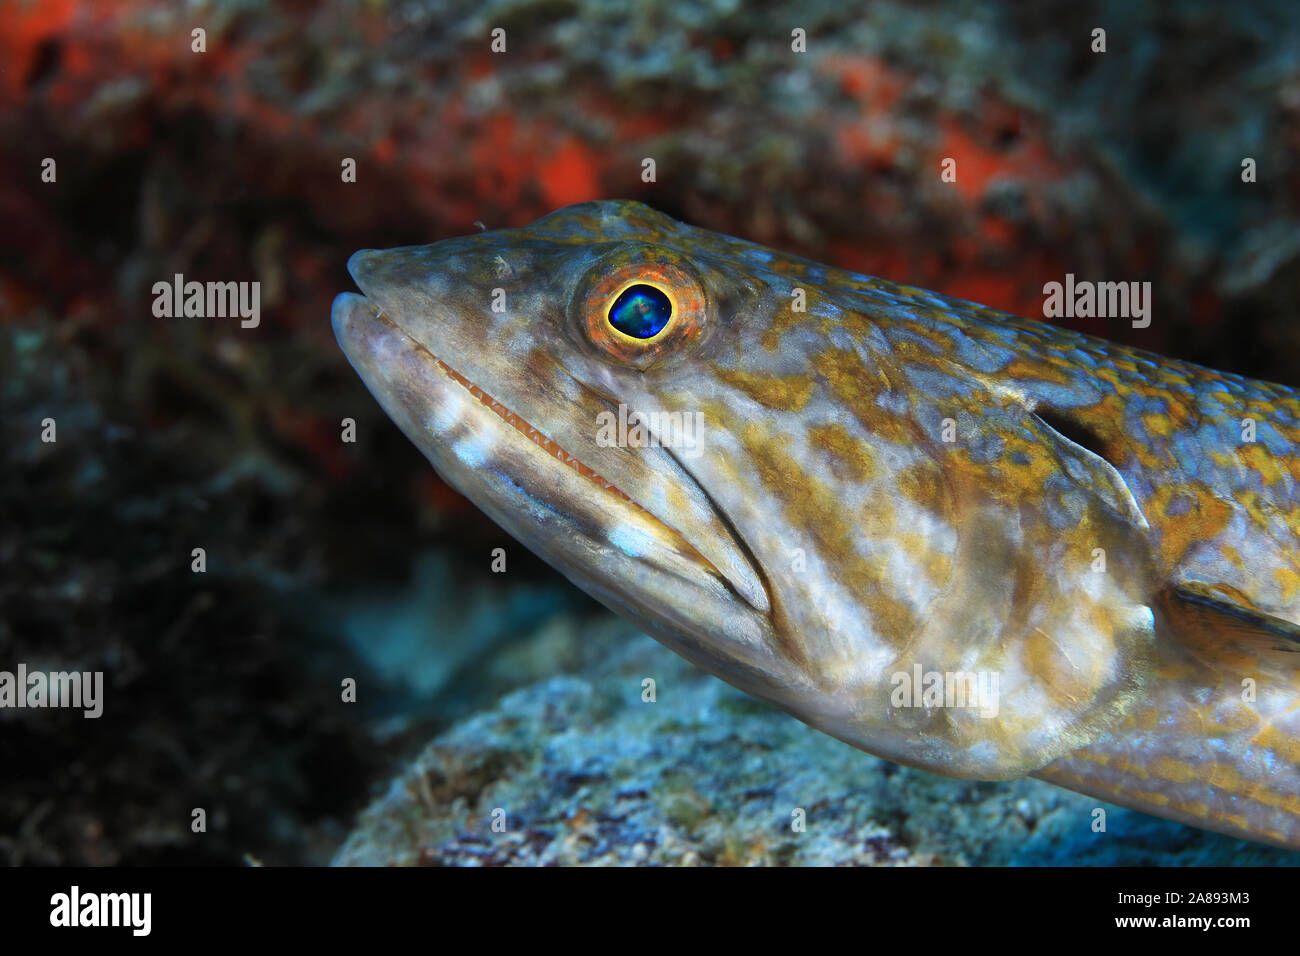 Sand diver lizardfish (Synodus intermedius) underwater in the Caribbean sea of Bonaire Stock Photo